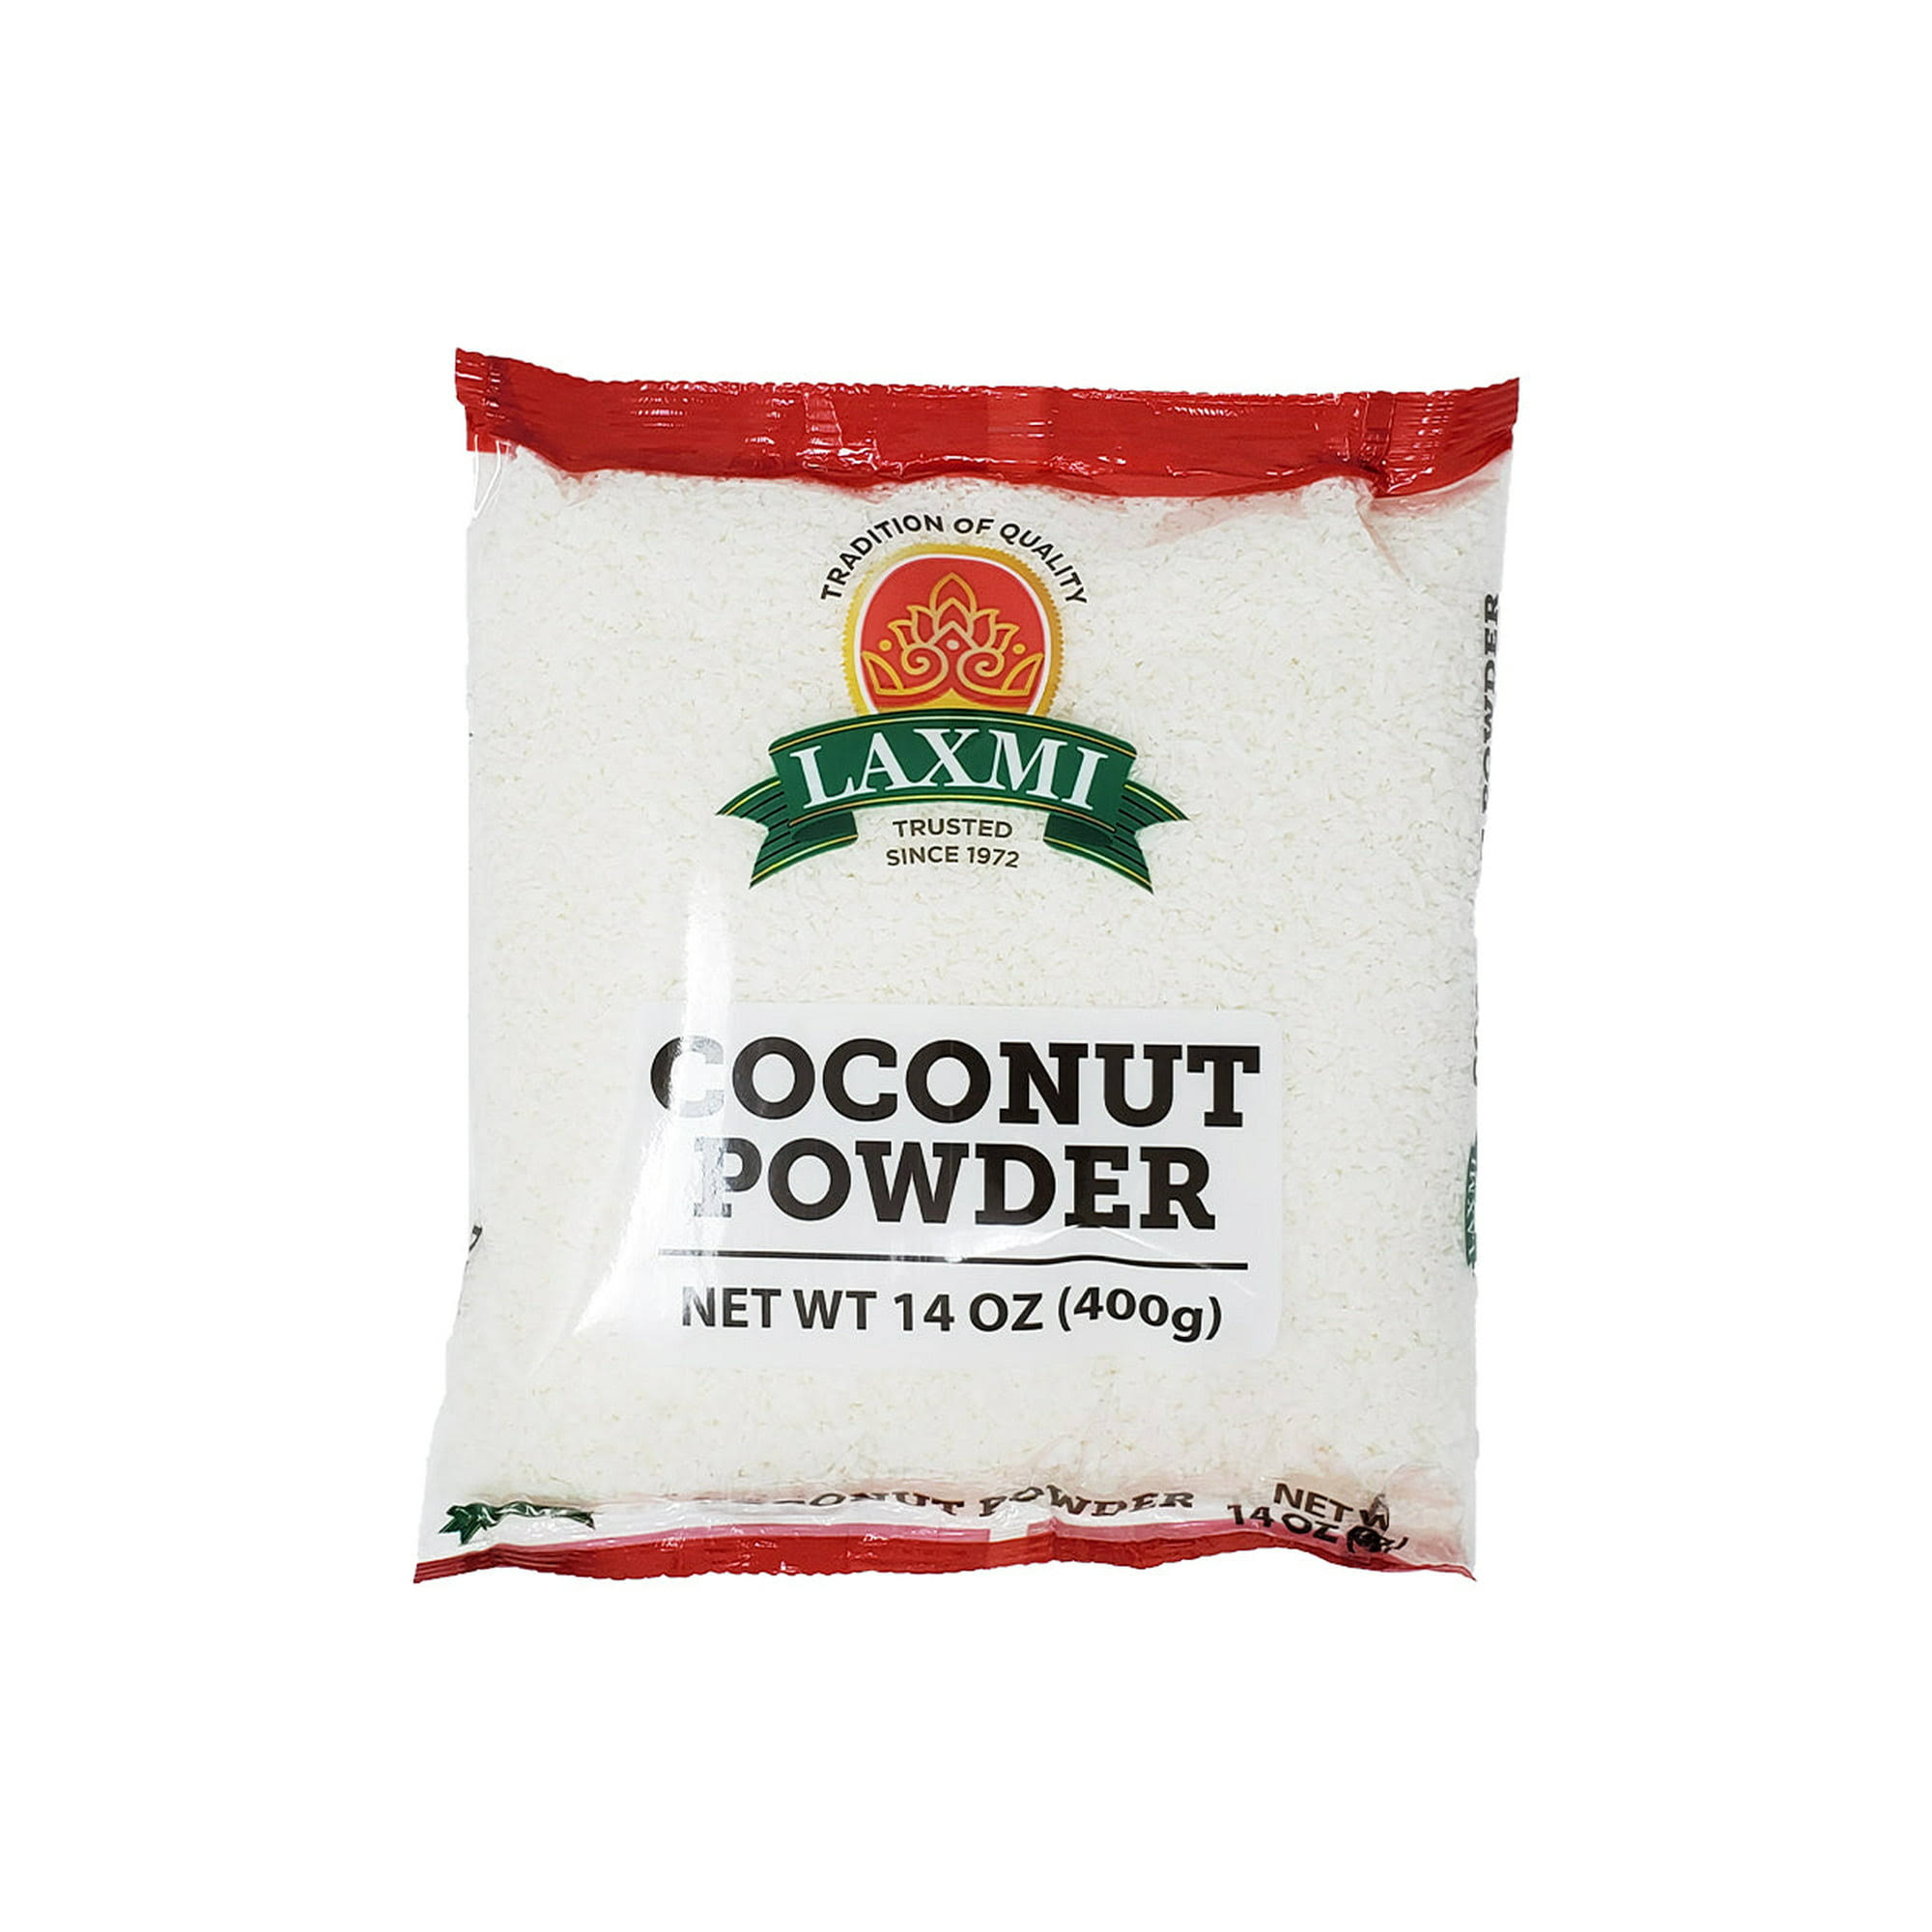 Laxmi Shredded Coconut Powder, Traditional Indian Ingredients (Medium)